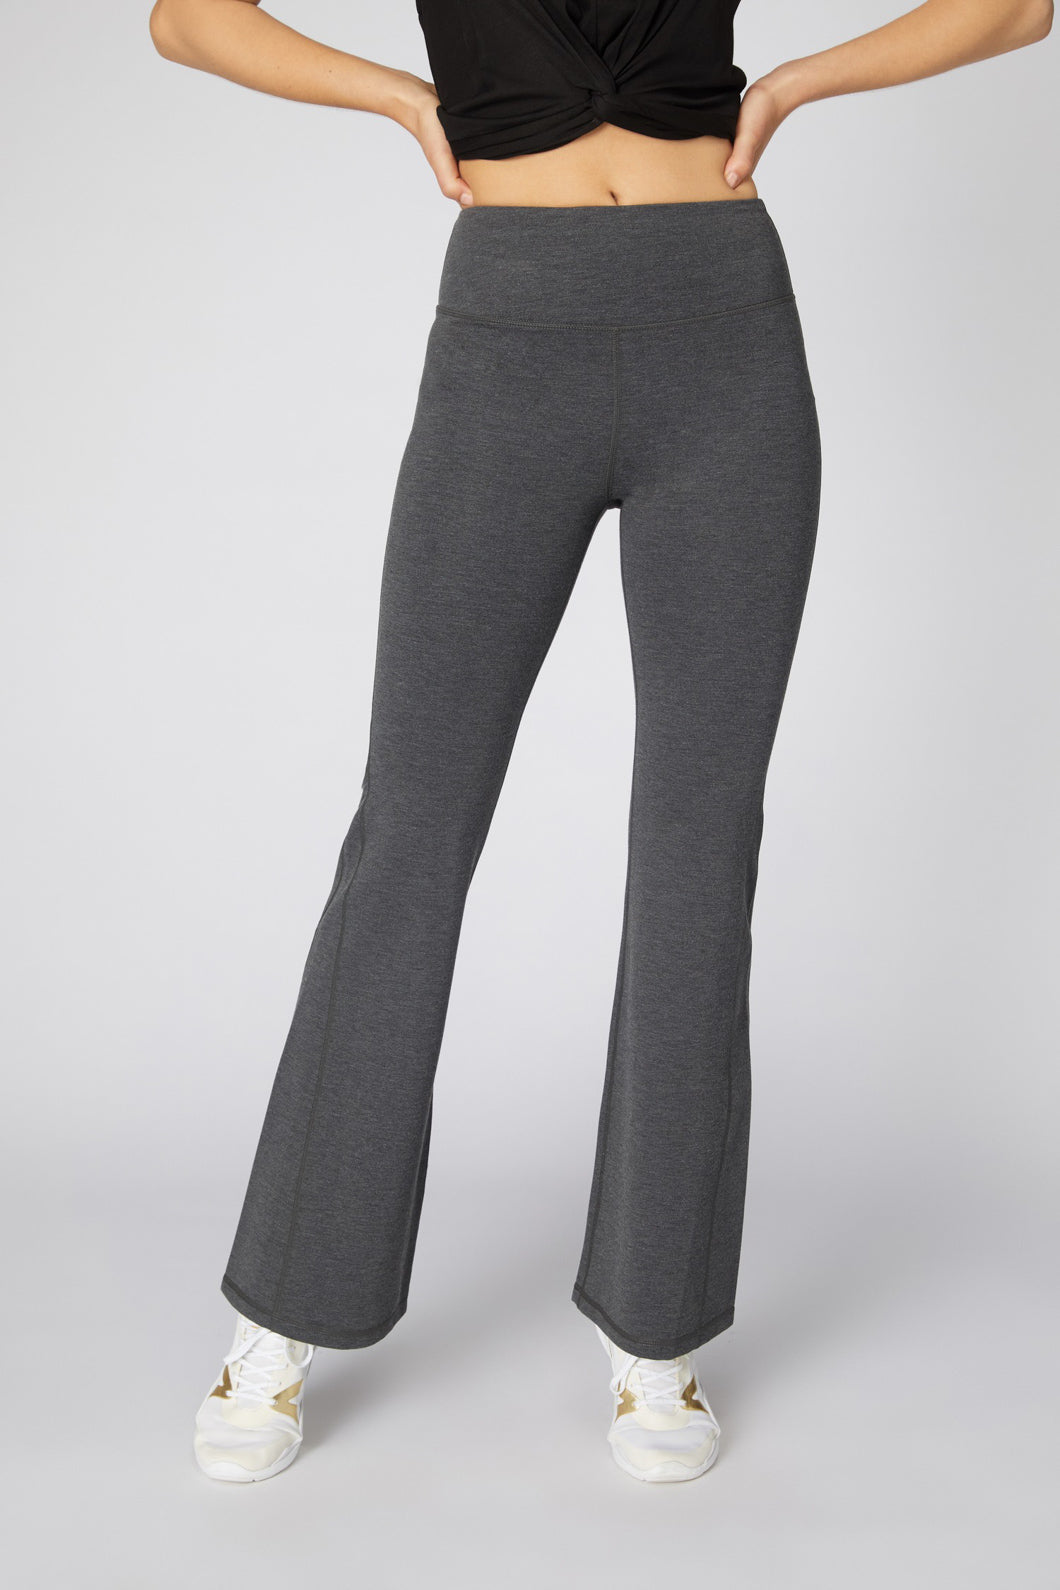 Buy ViQ VIQ Women Boot Cut Yoga Pants 2024 Online